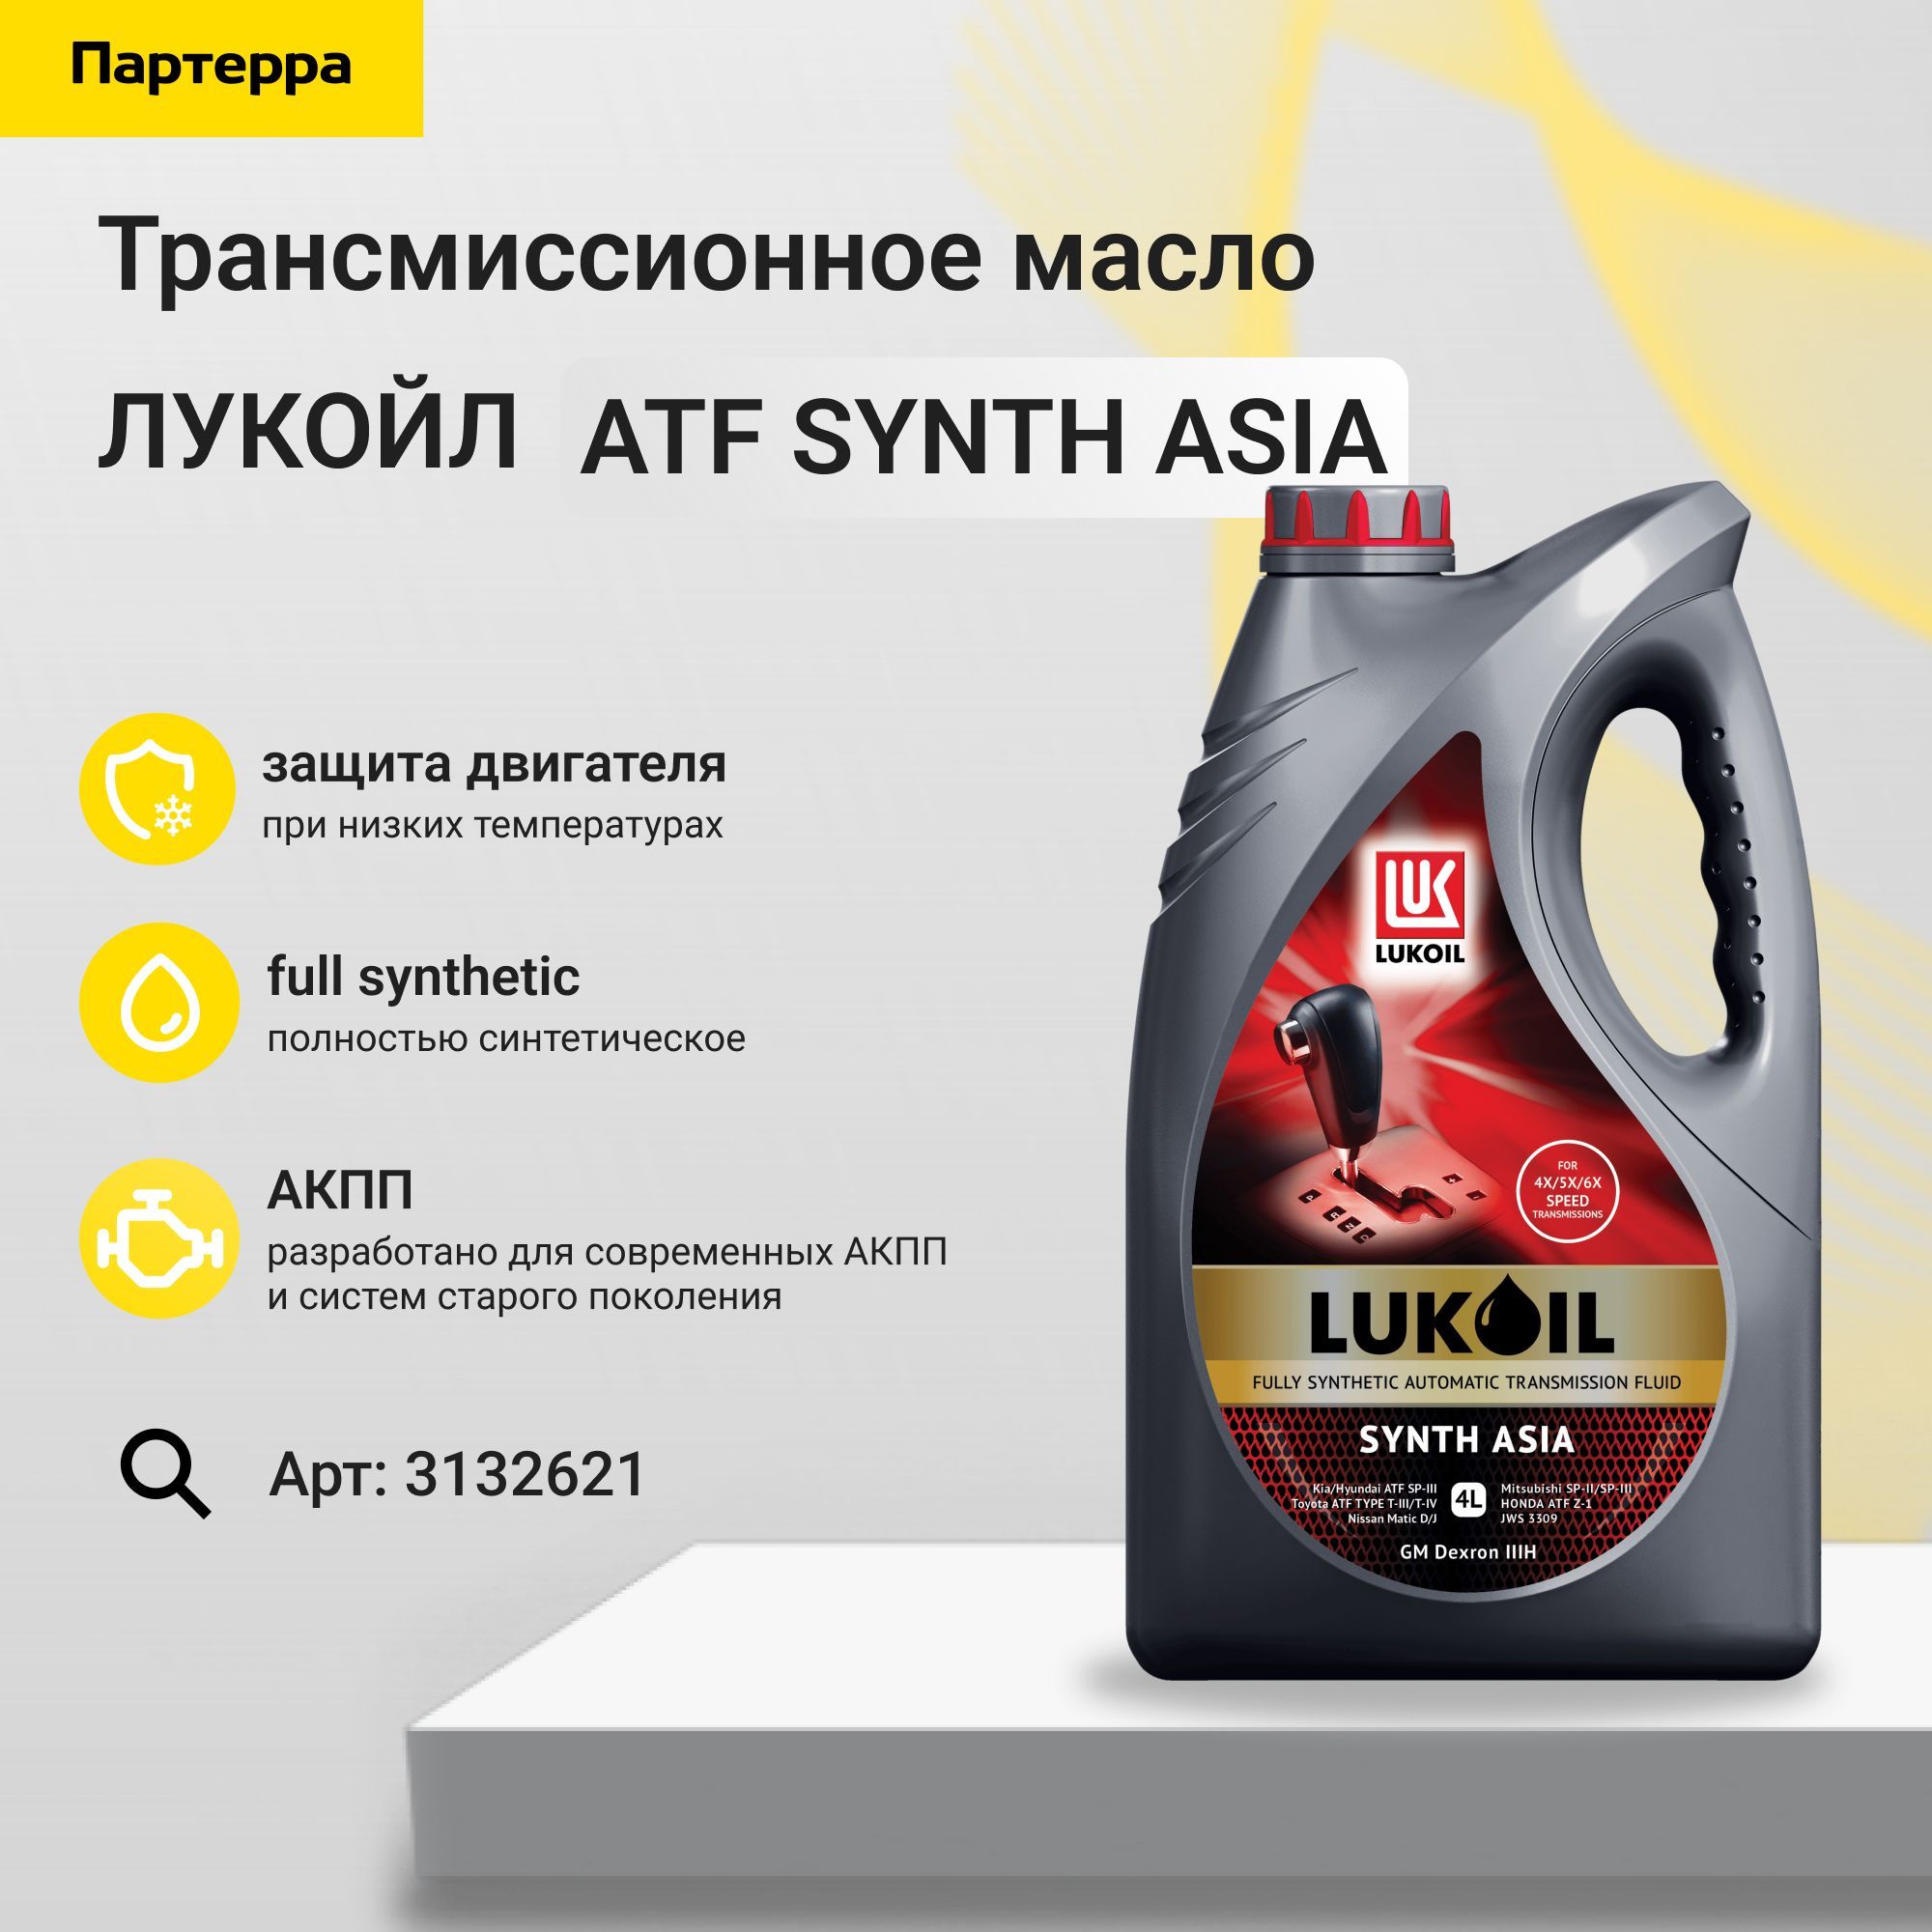 Масло лукойл atf synth. Трансмиссионное масло CVTF НК.4л Lukoil 3146925. 3261423 Лукойл масло спецификация DCTF. 3132621. NGN -6 ATF характеристики цвет.